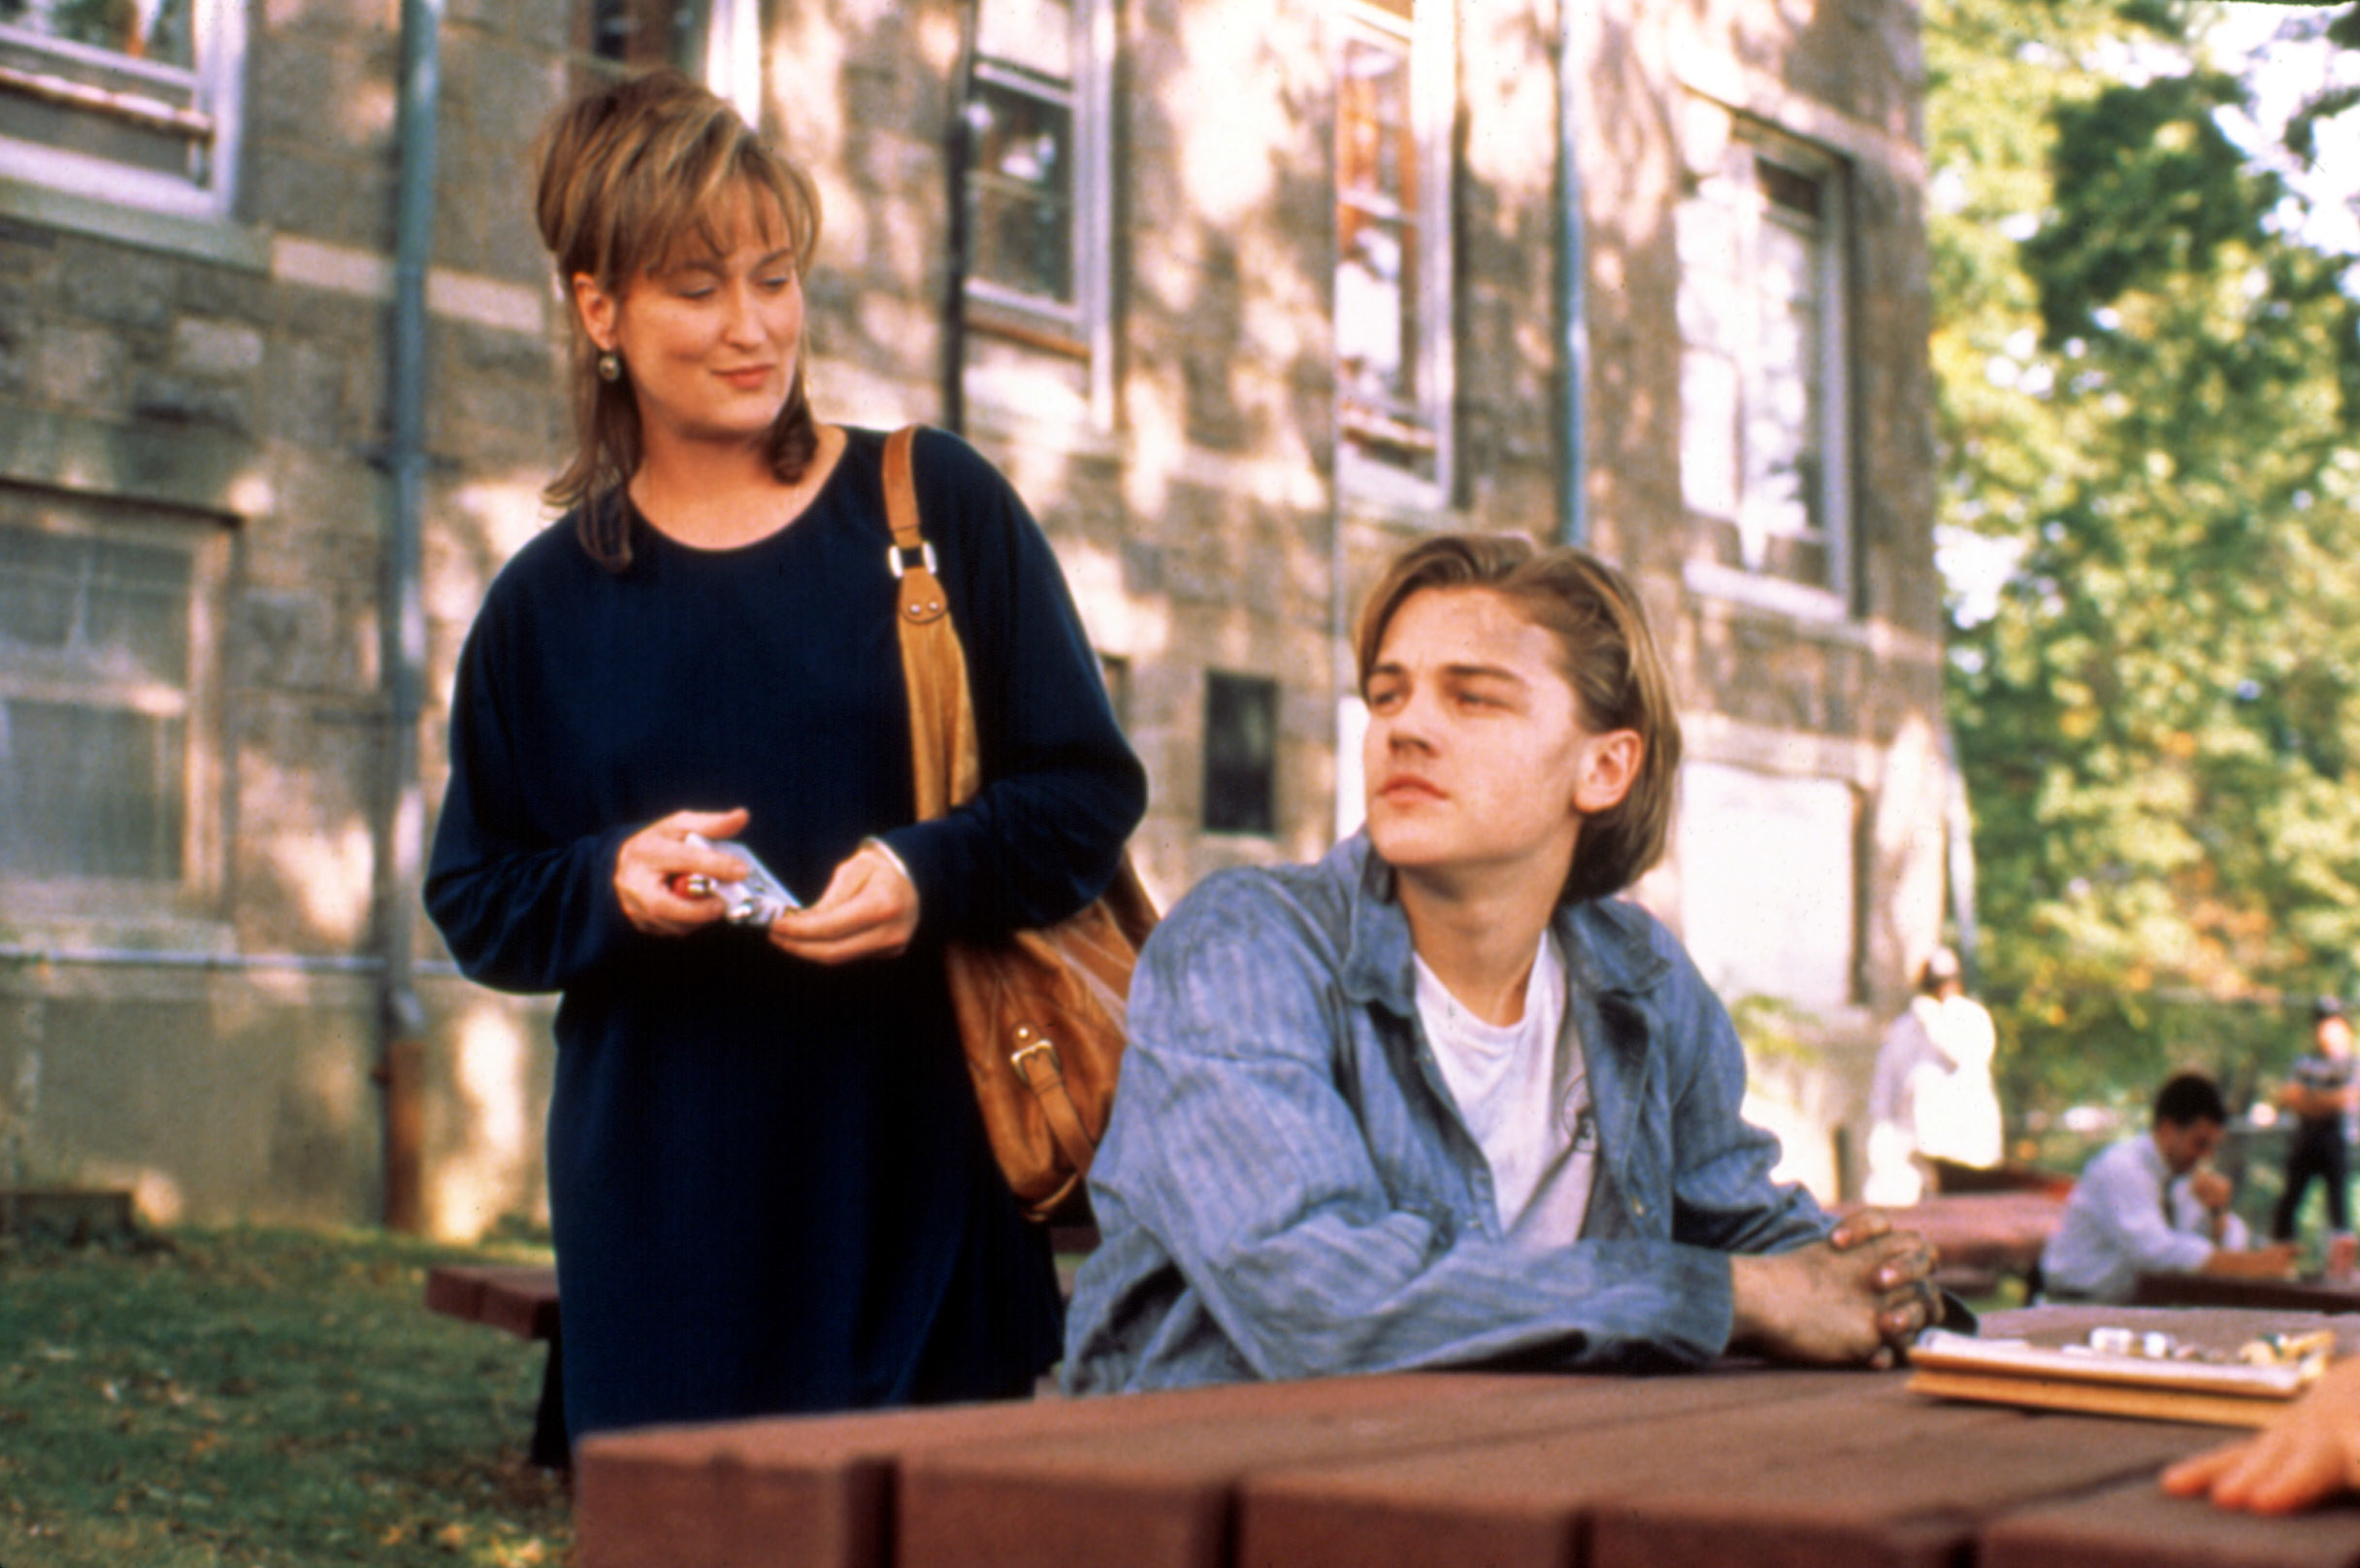 Meryl Streep stands behind Leonardo DiCaprio outside.